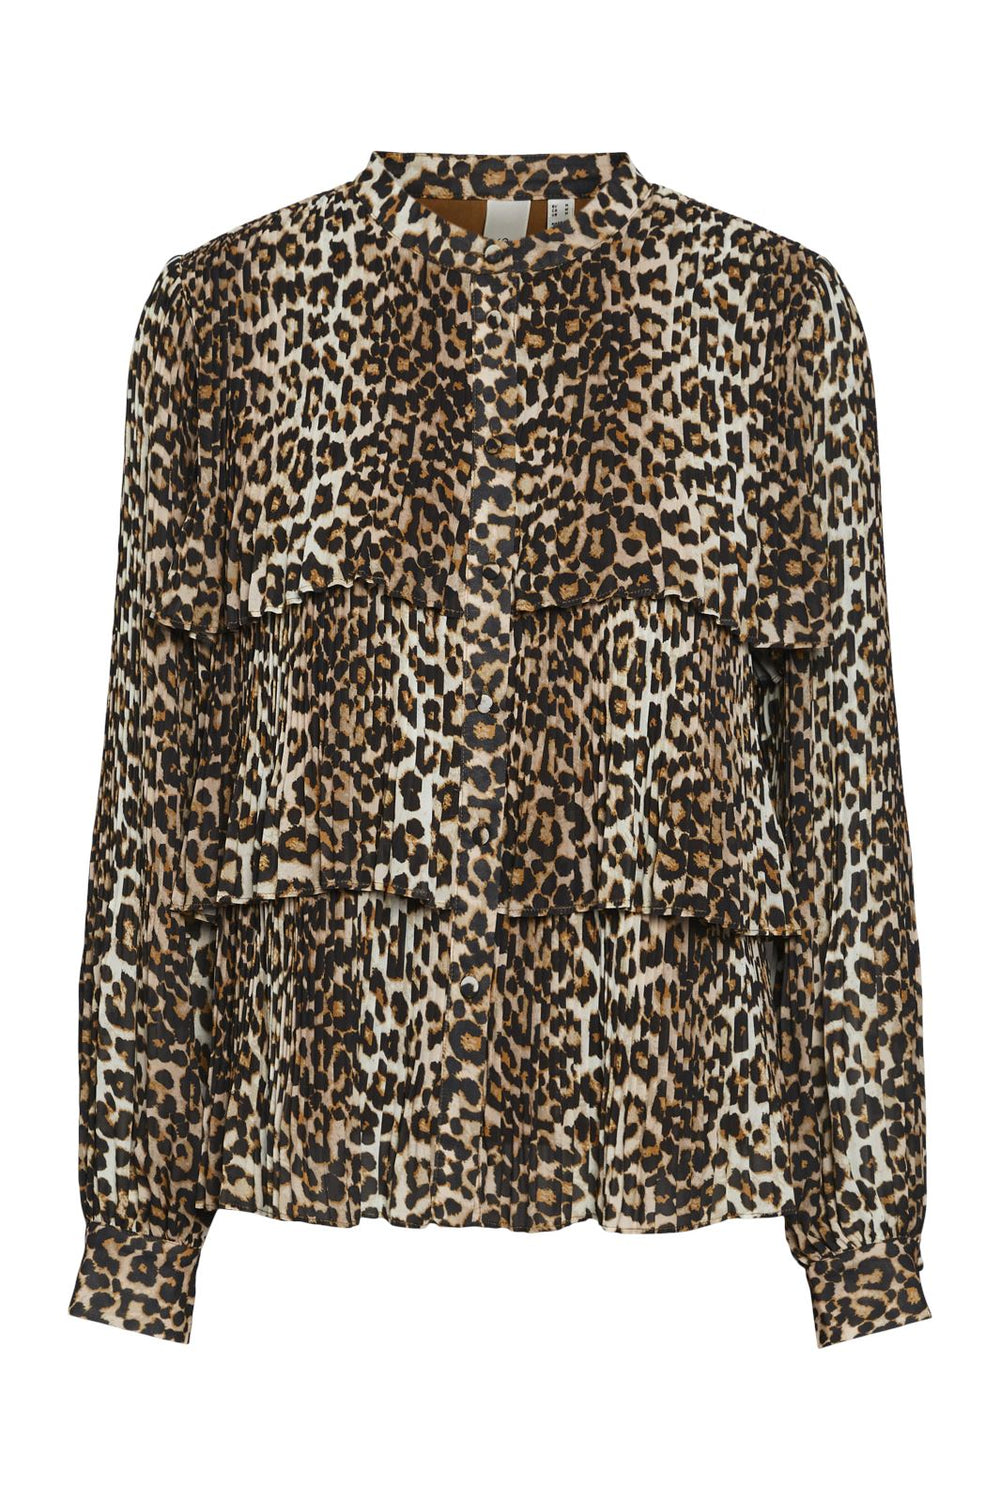 Y.A.S - Yaskalaya Ls Shirt - 4568815 Nomad Leopard Print